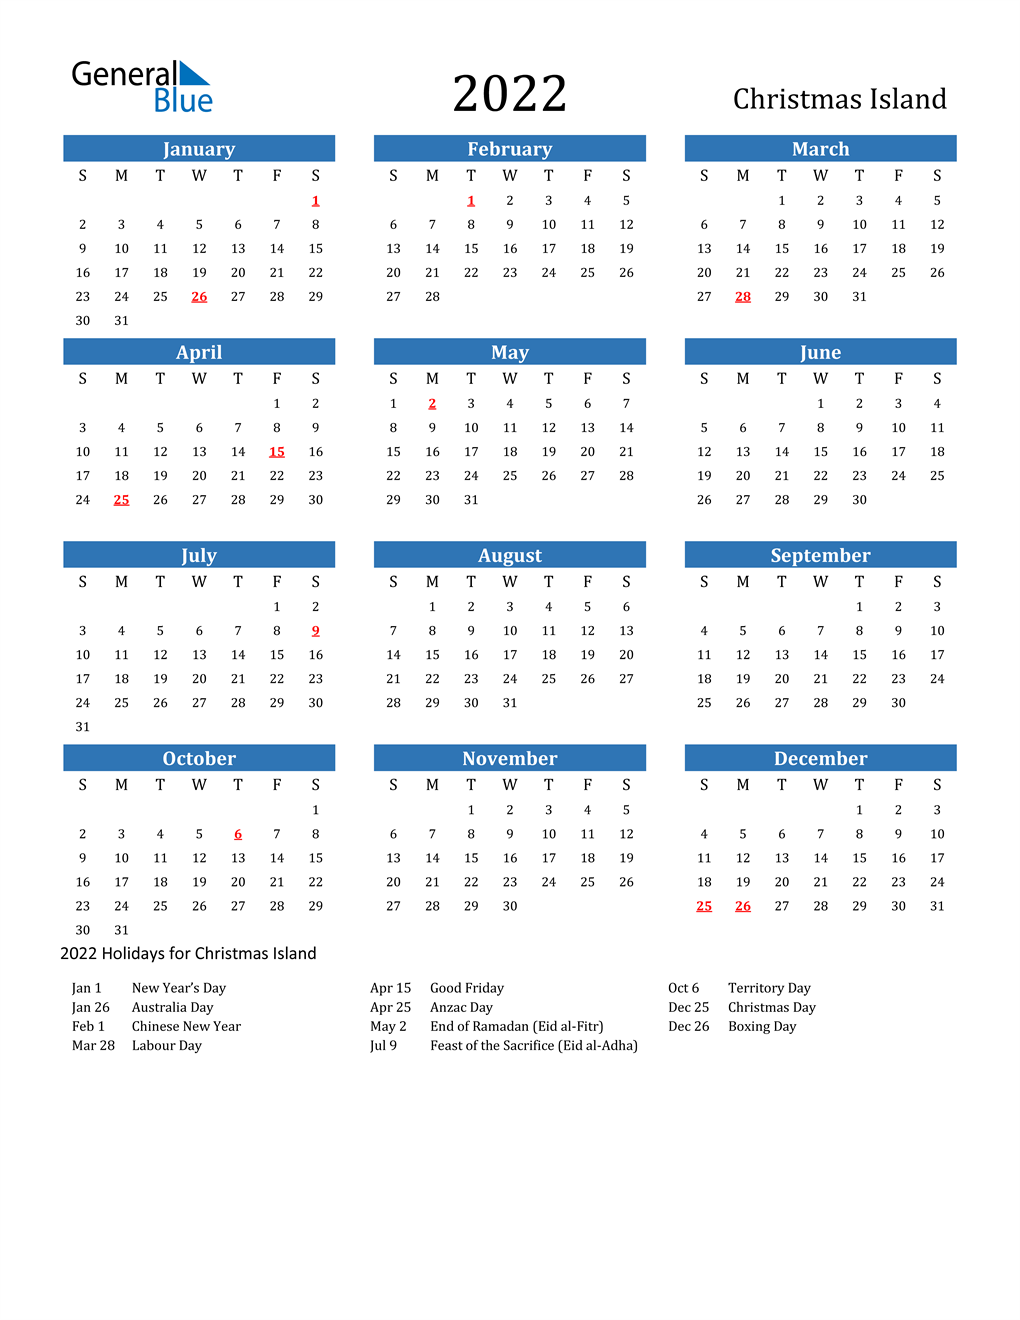 The Christmas Calendar 2022 2022 Christmas Island Calendar With Holidays